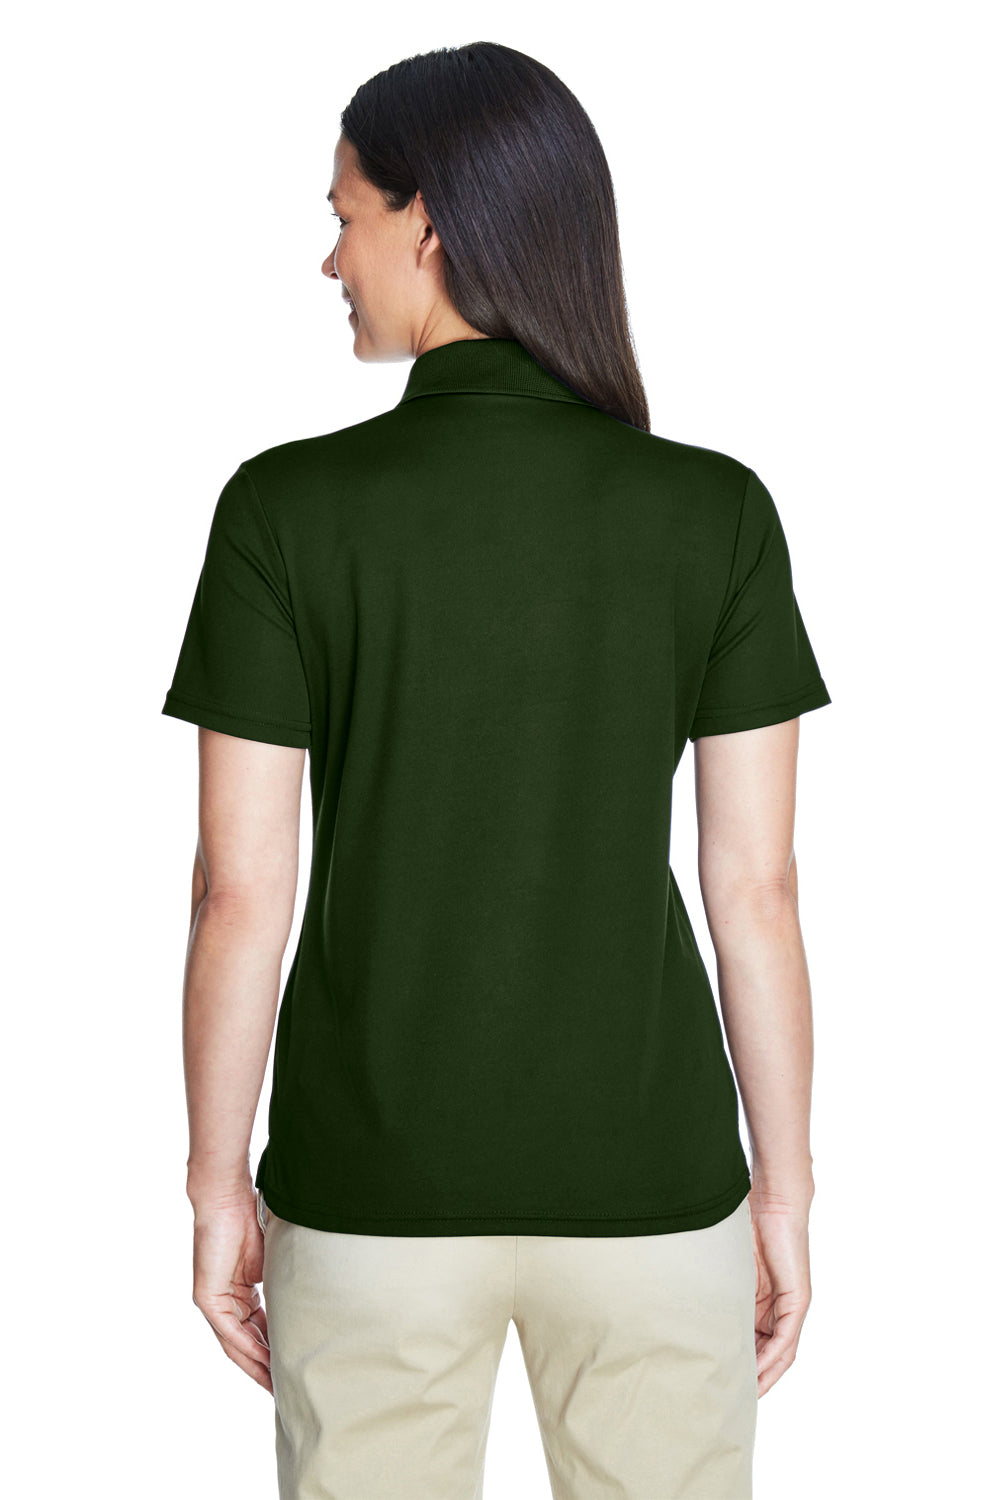 Core 365 78181 Womens Origin Performance Moisture Wicking Short Sleeve Polo Shirt Forest Green Back